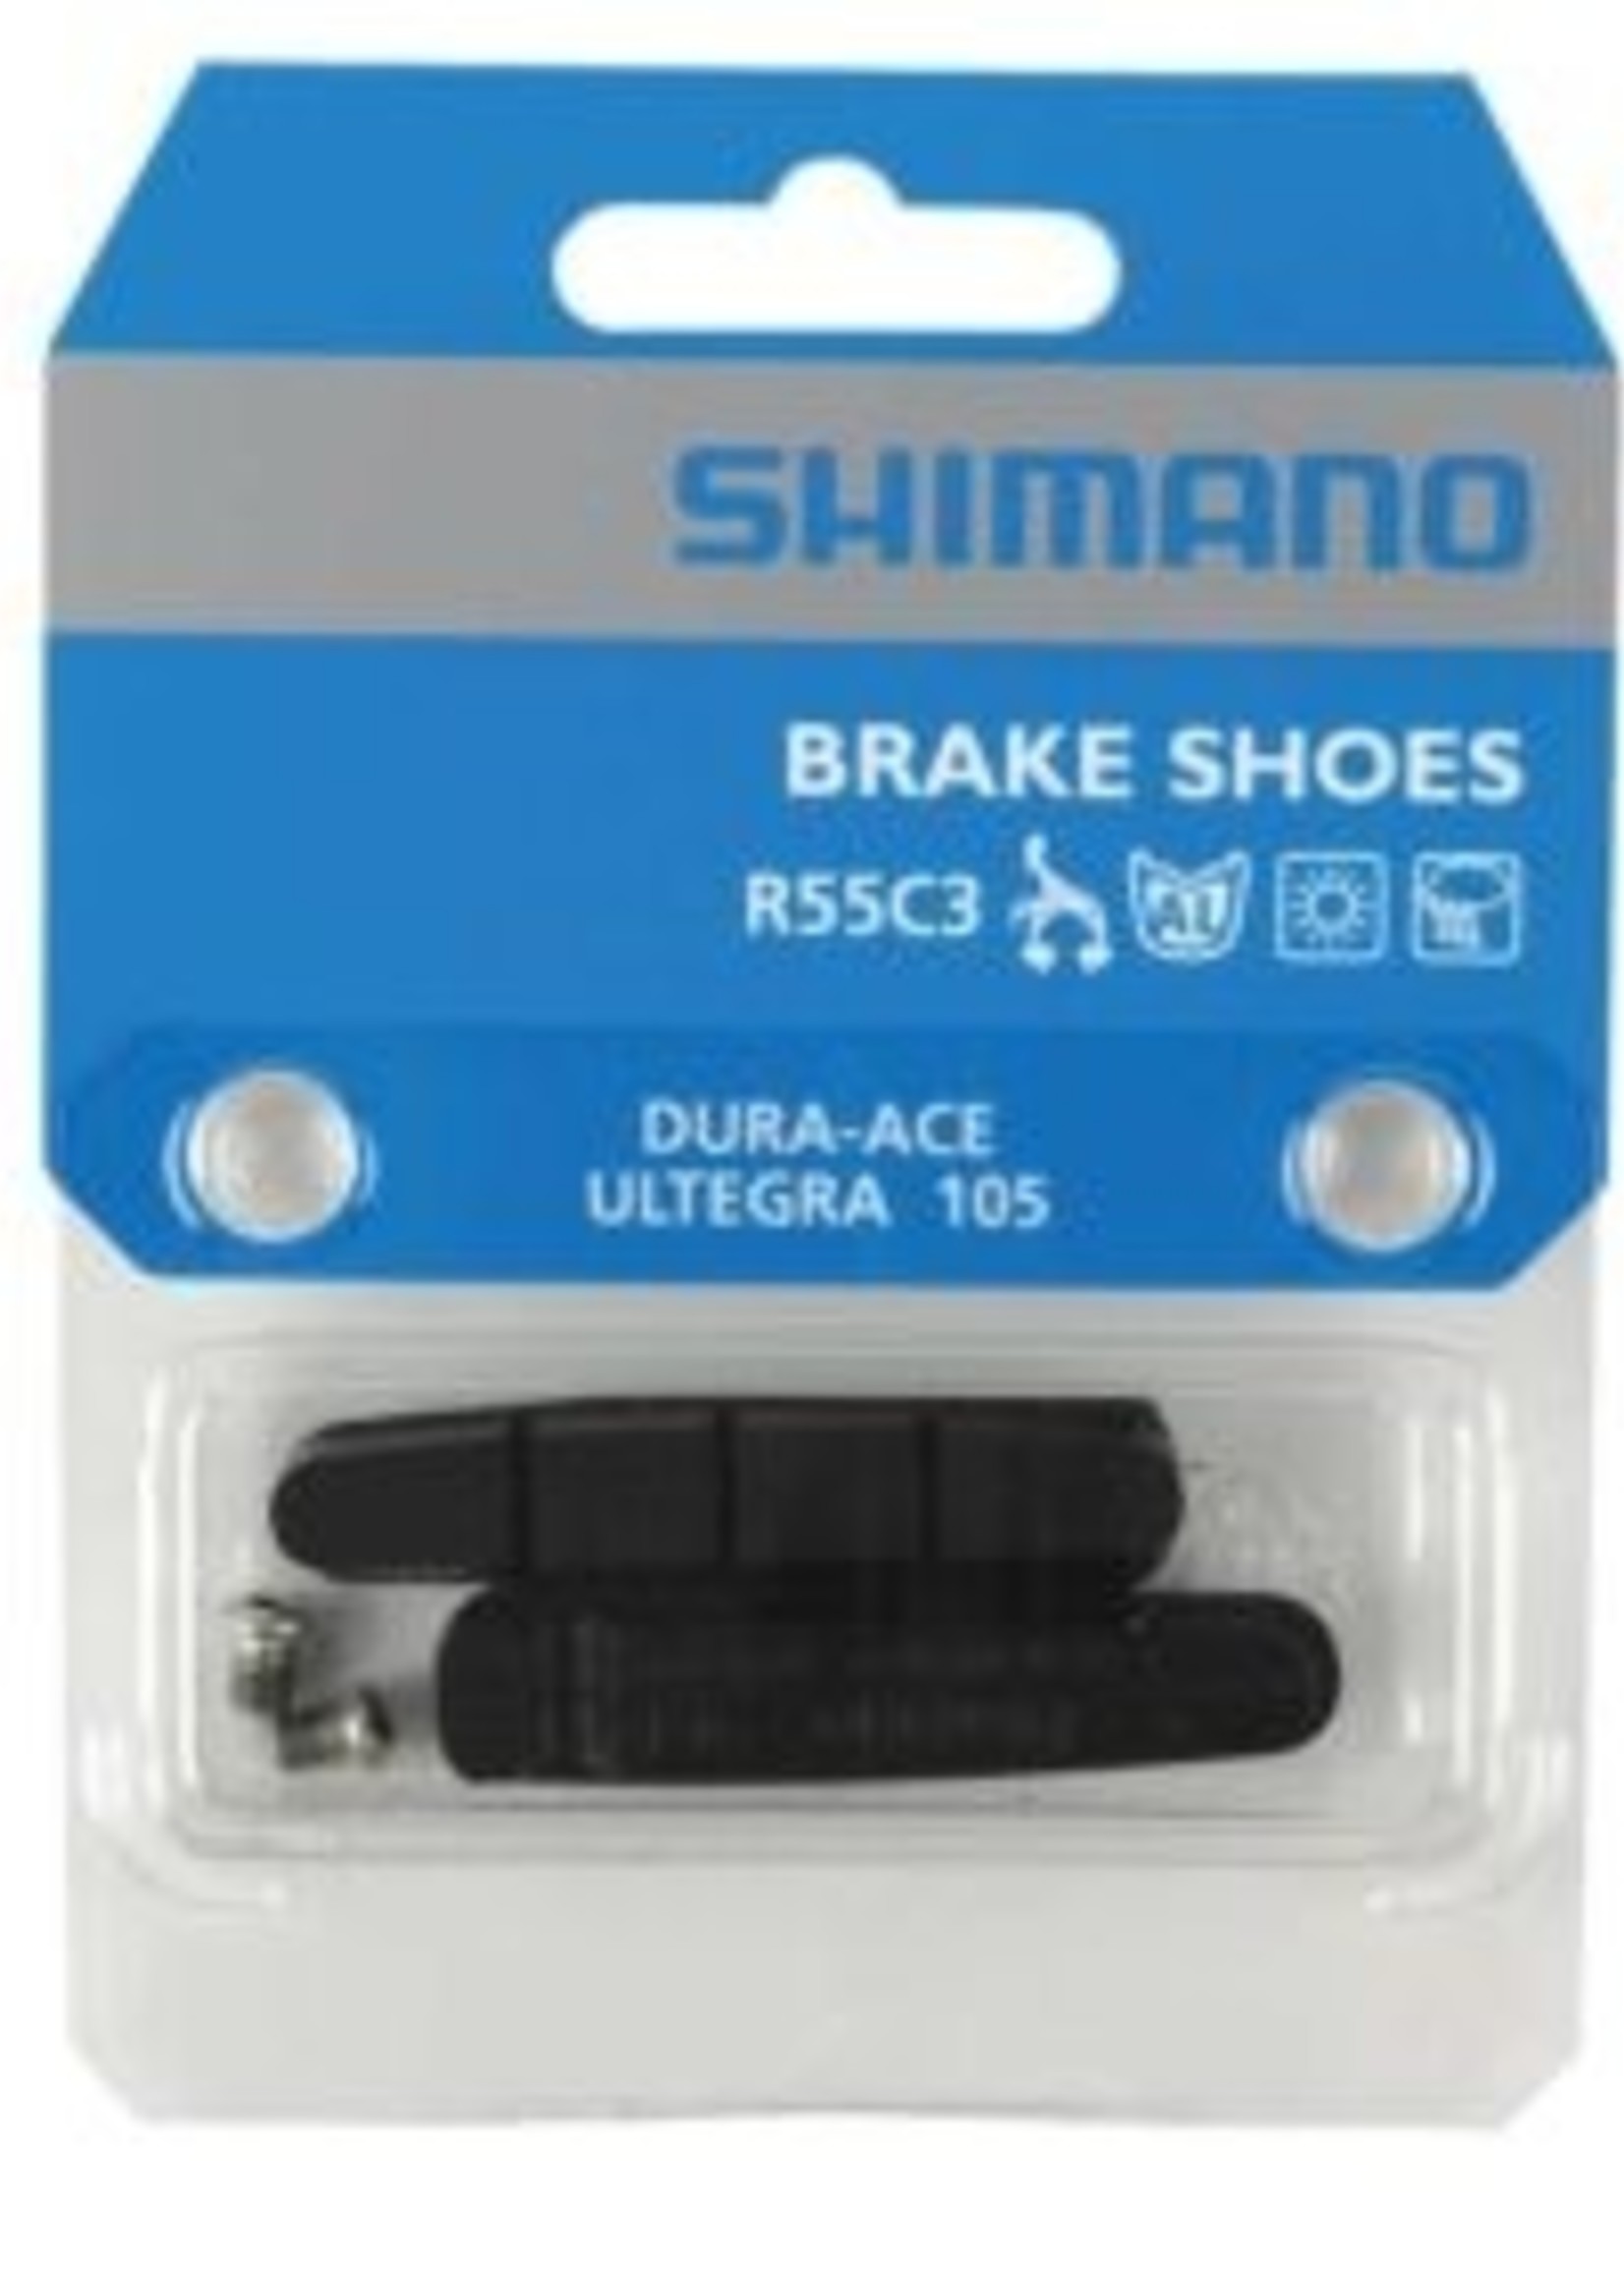 Shimano Shiman, Y8FN98090, R55C3, BR-7900, Brake pad inserts, Pair